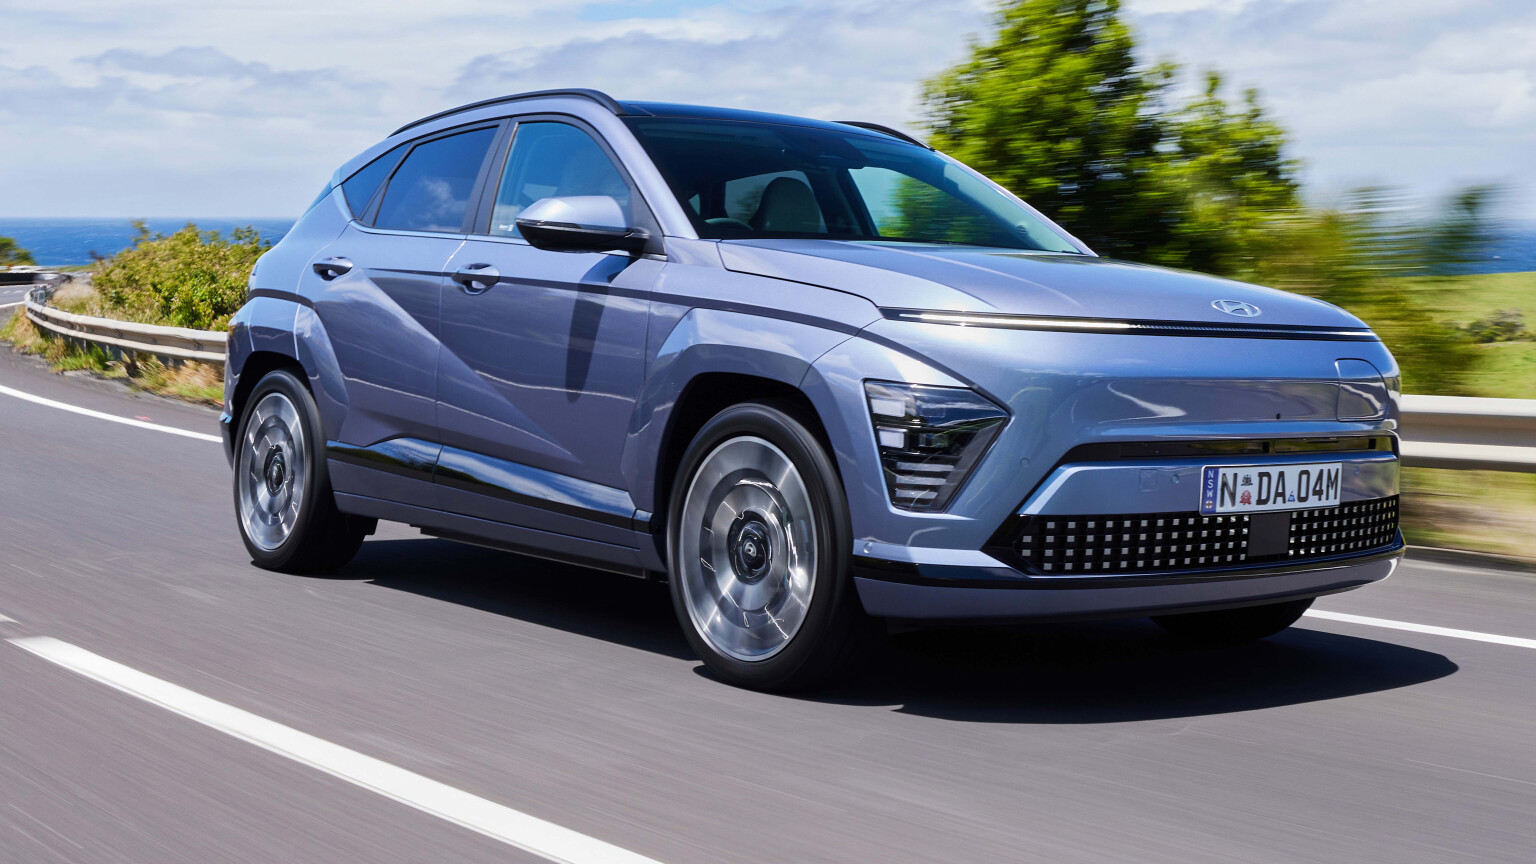 New Hyundai Tucson revealed: everything we know so far